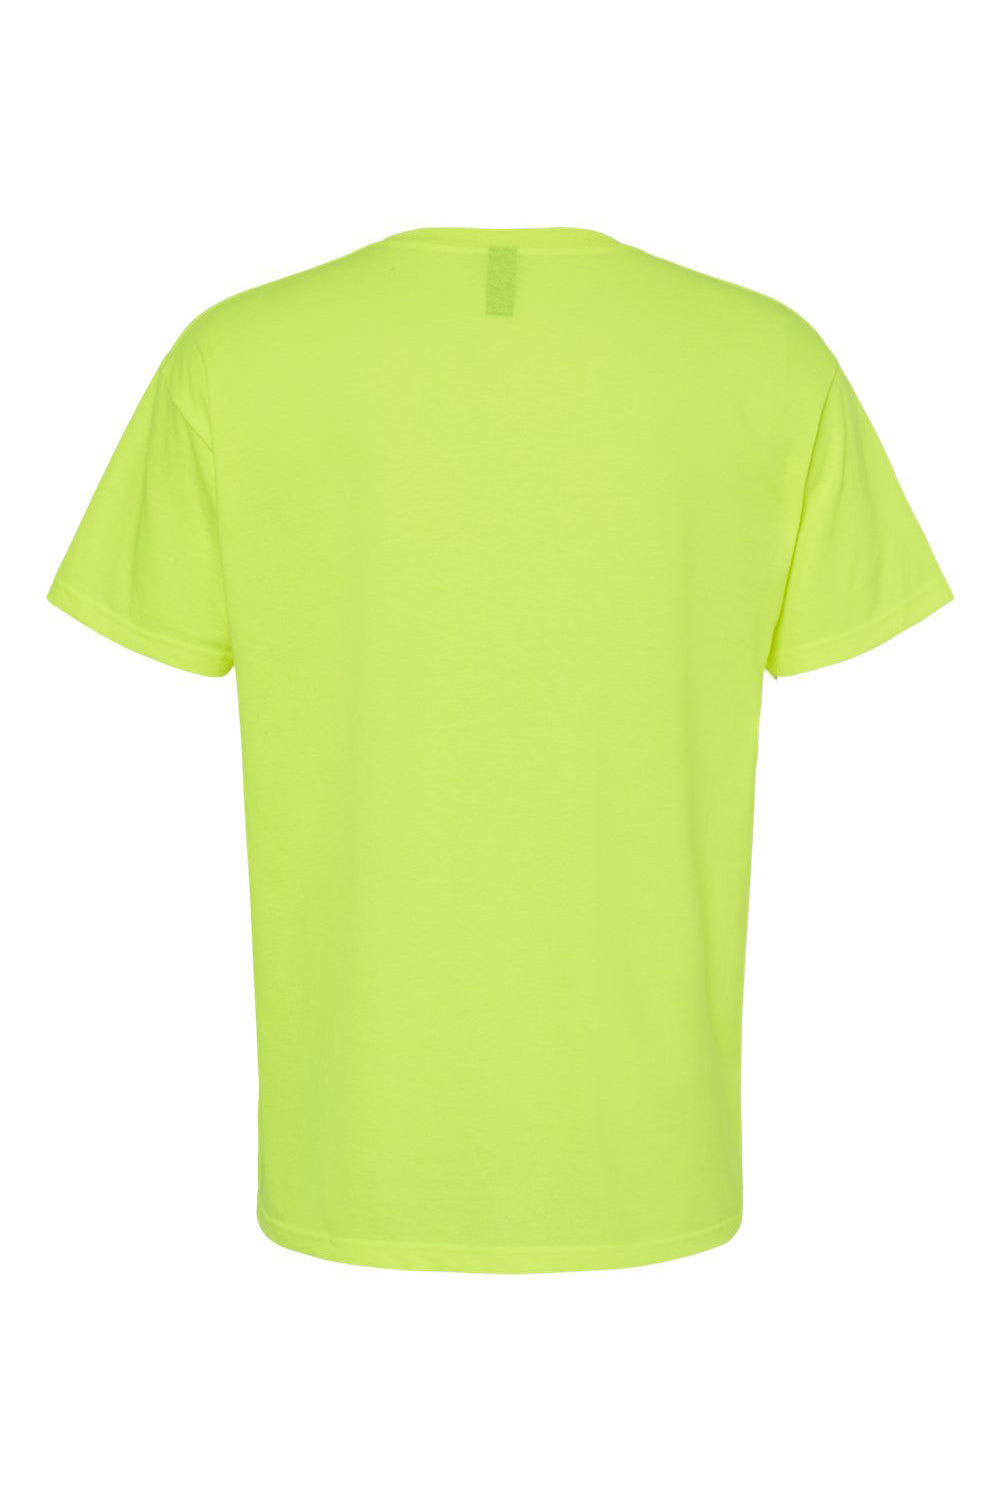 M&O 4800 Mens Gold Soft Touch Short Sleeve Crewneck T-Shirt Safety Green Flat Back